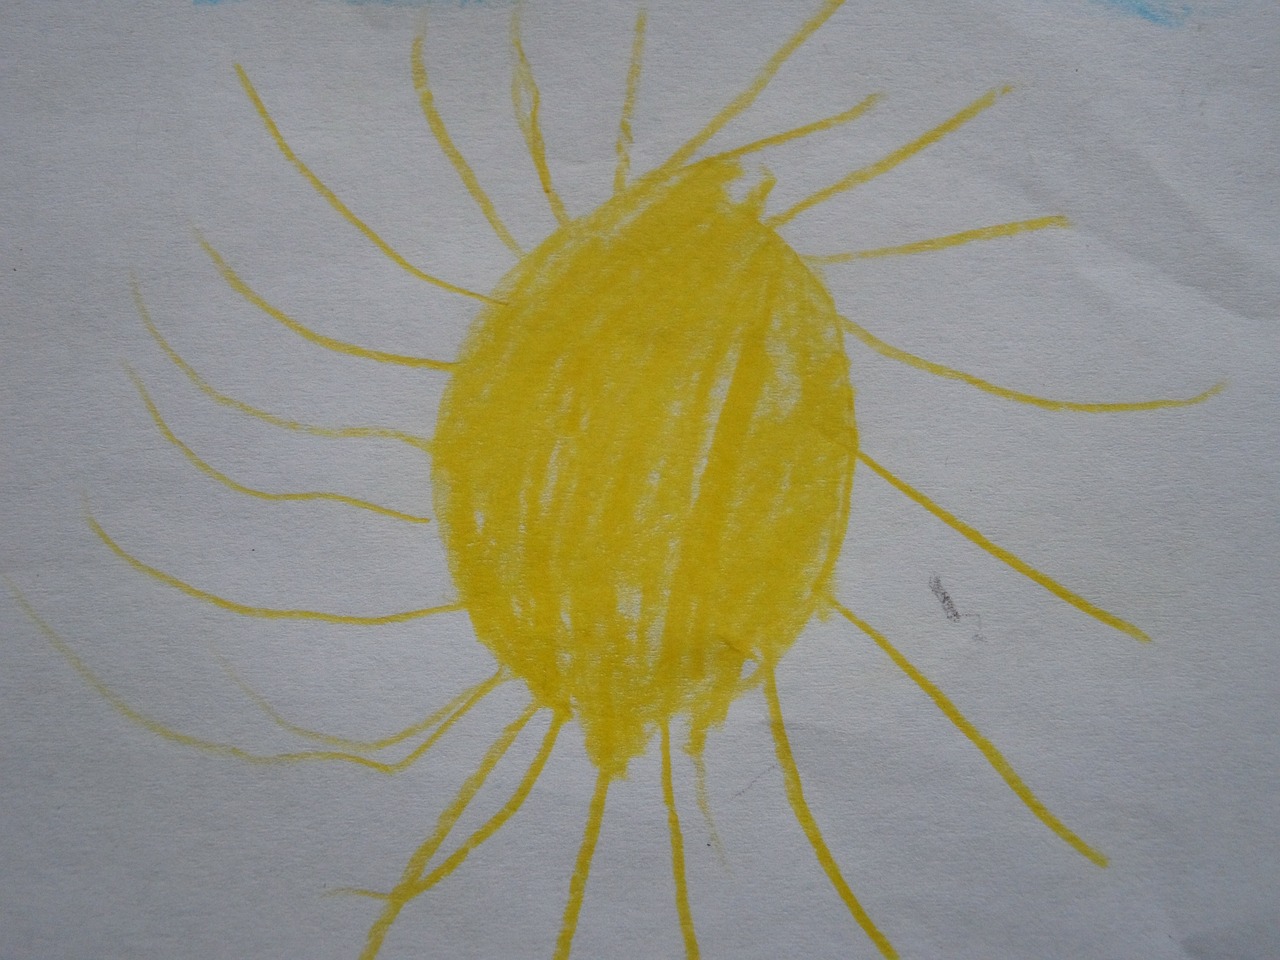 sun children drawing character development free photo